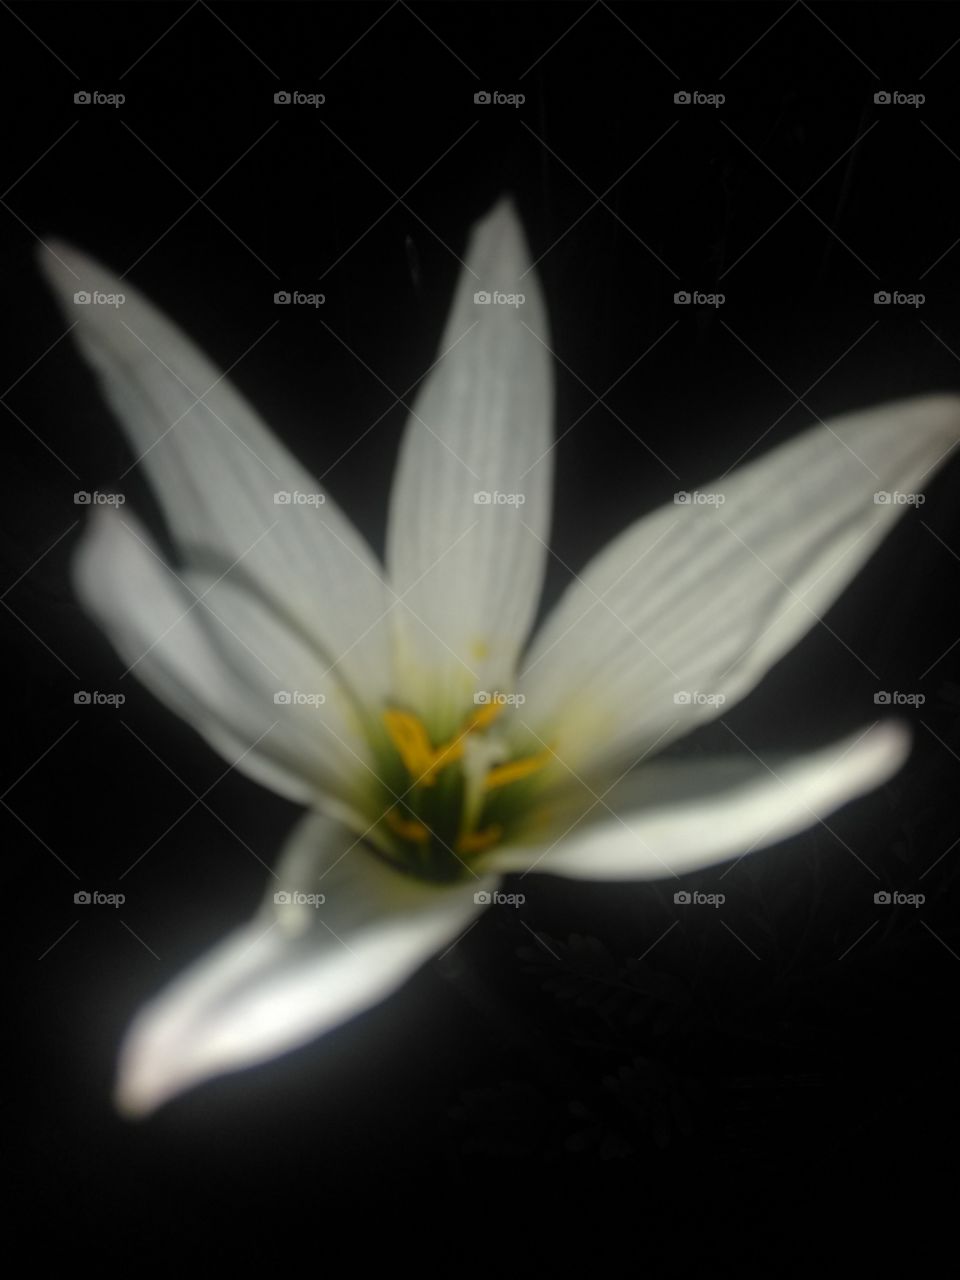 flower click